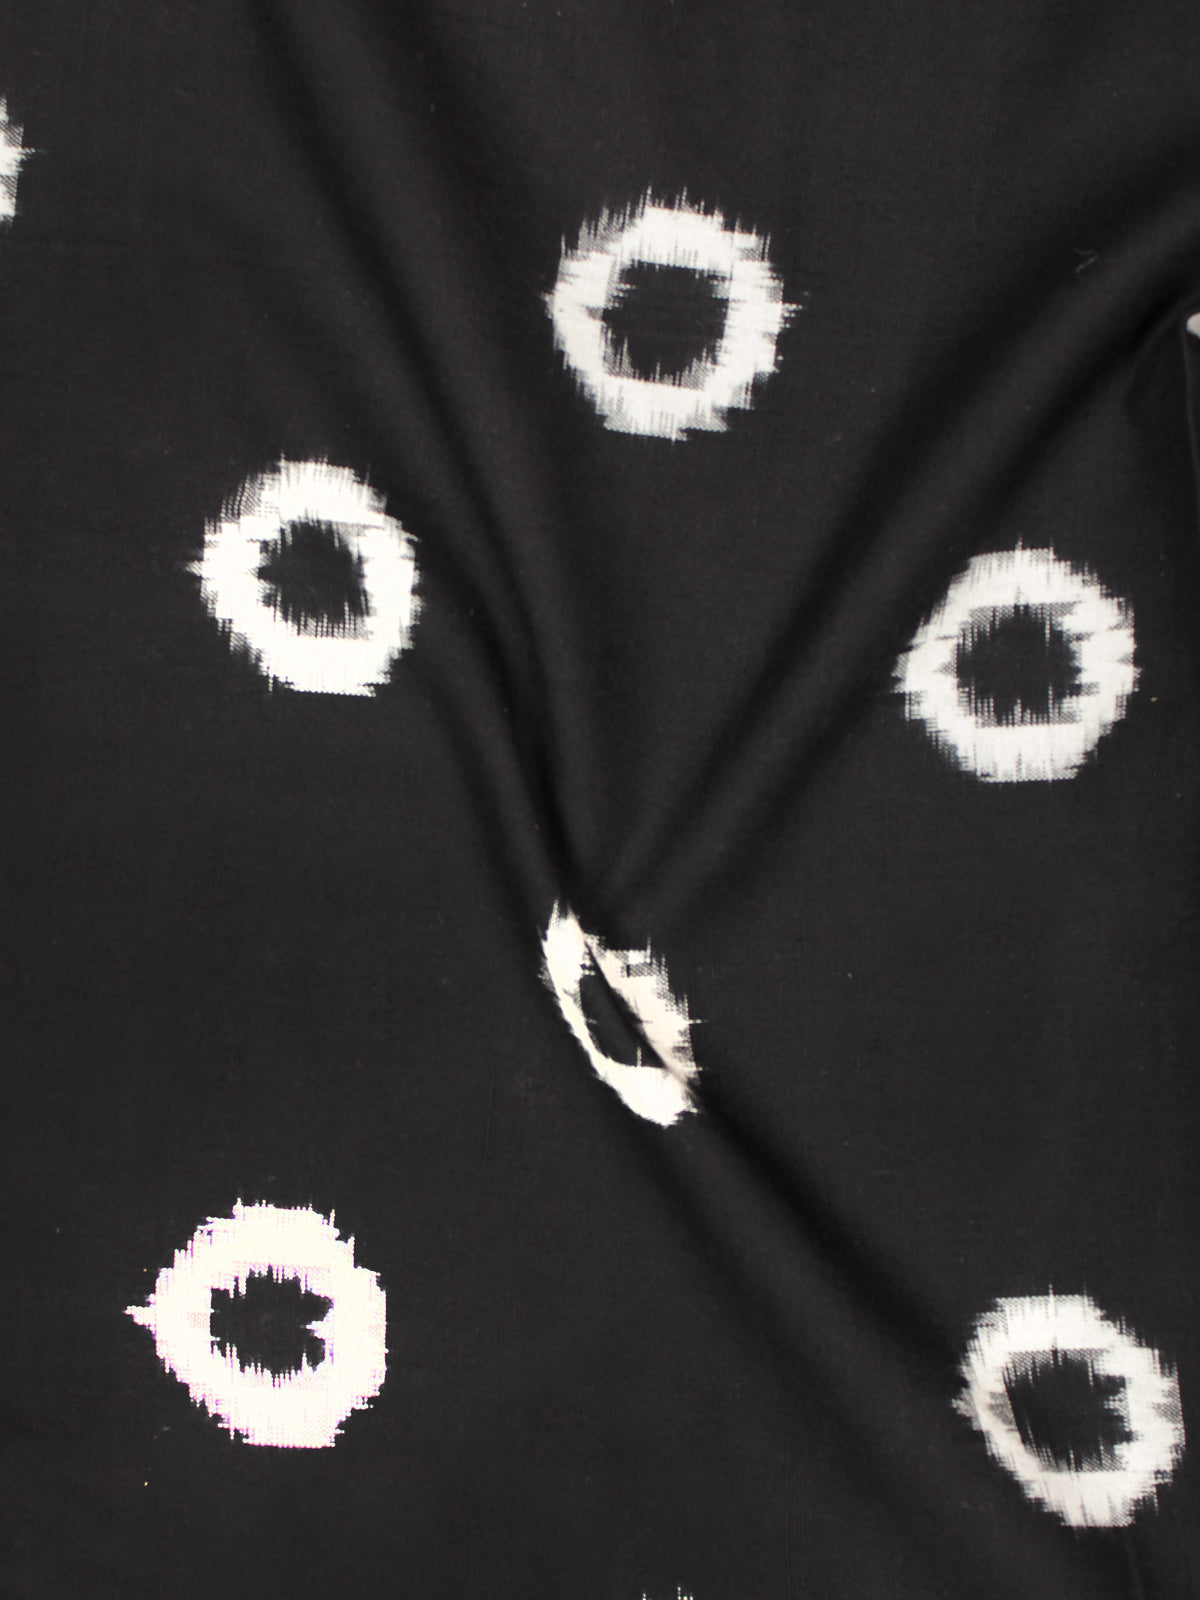 Black Ivory Pochampally Hand Weaved Double Ikat Circular Pattern Fabric Per Meter - F002F850